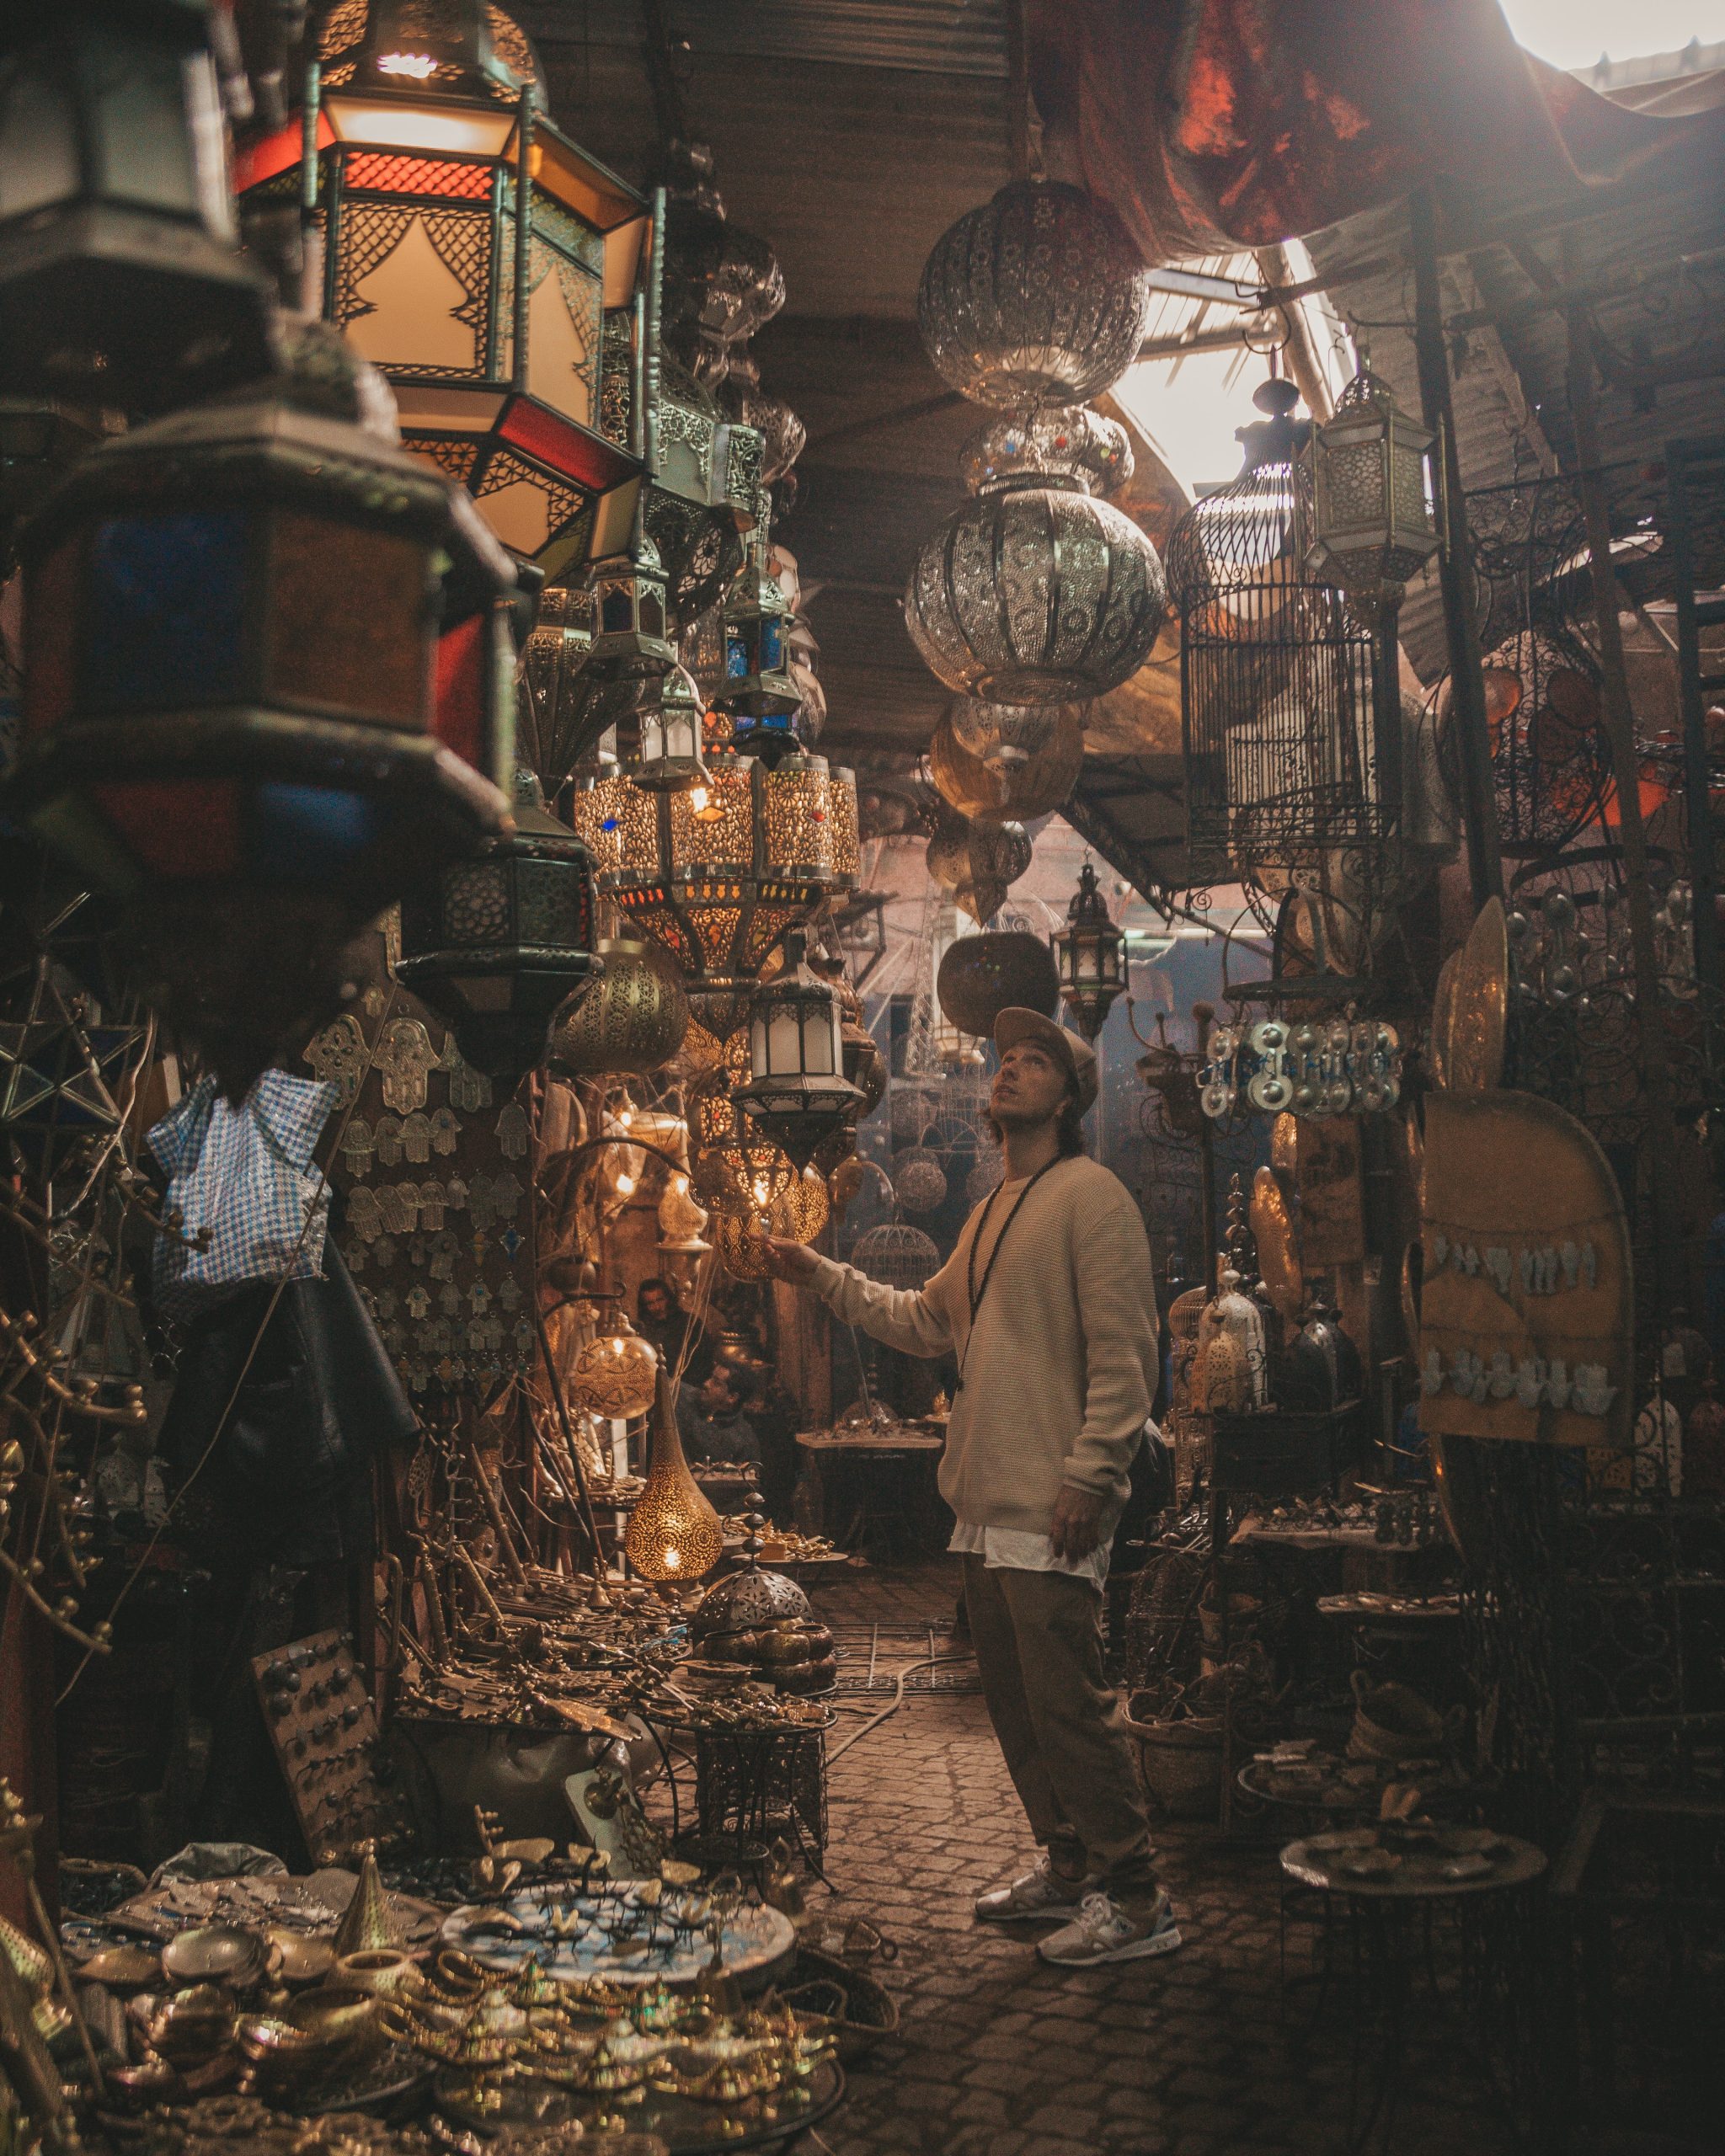 Marrakech Market day trip